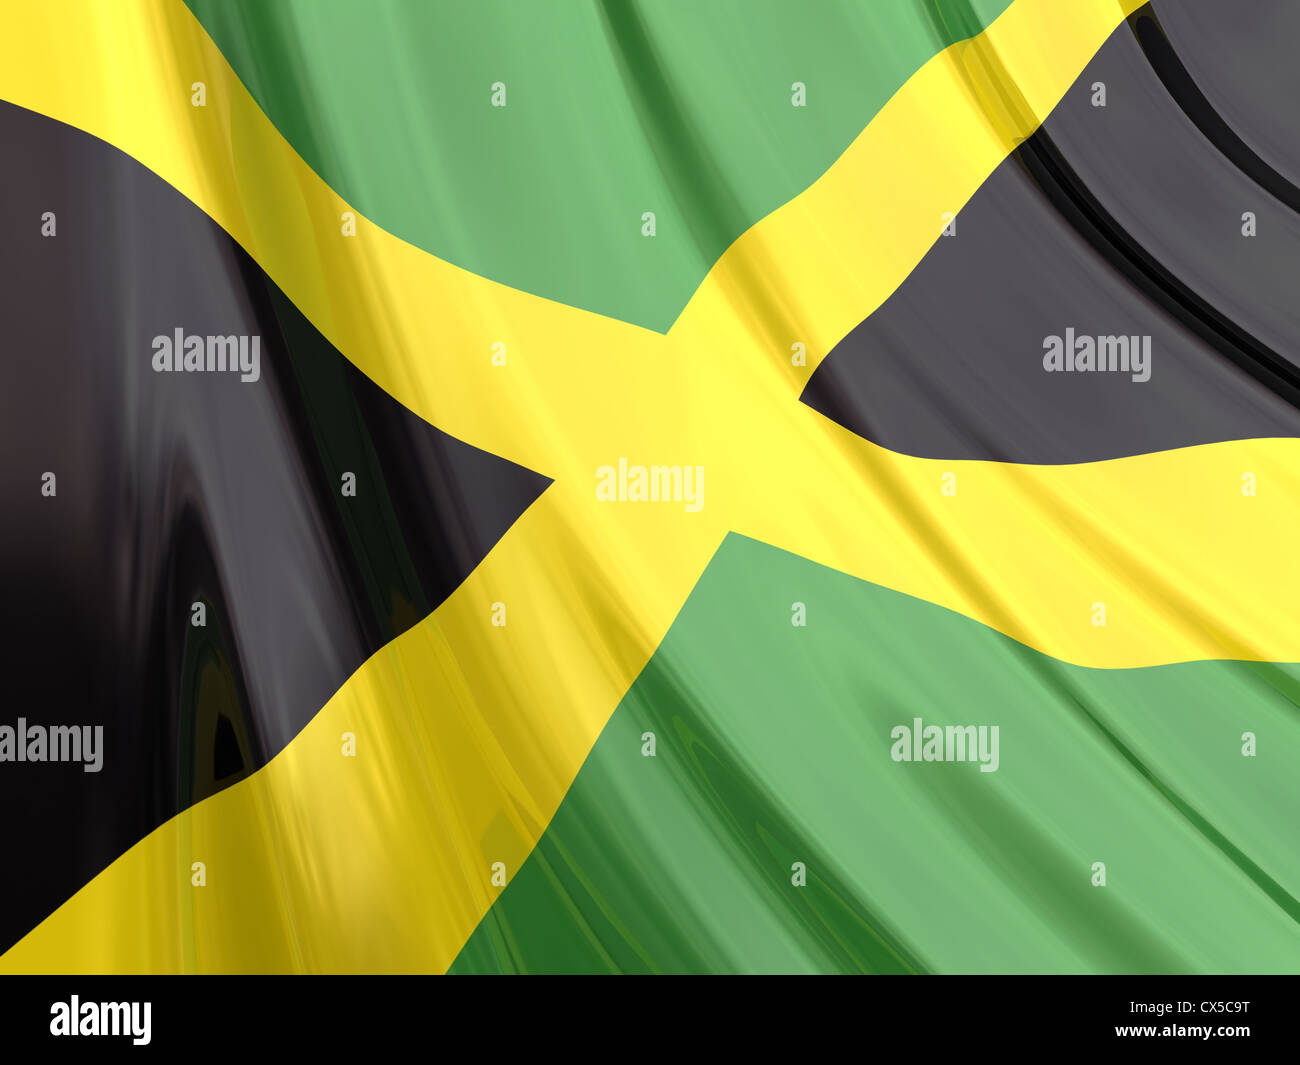 Glossy flag of Jamaica. Stock Photo